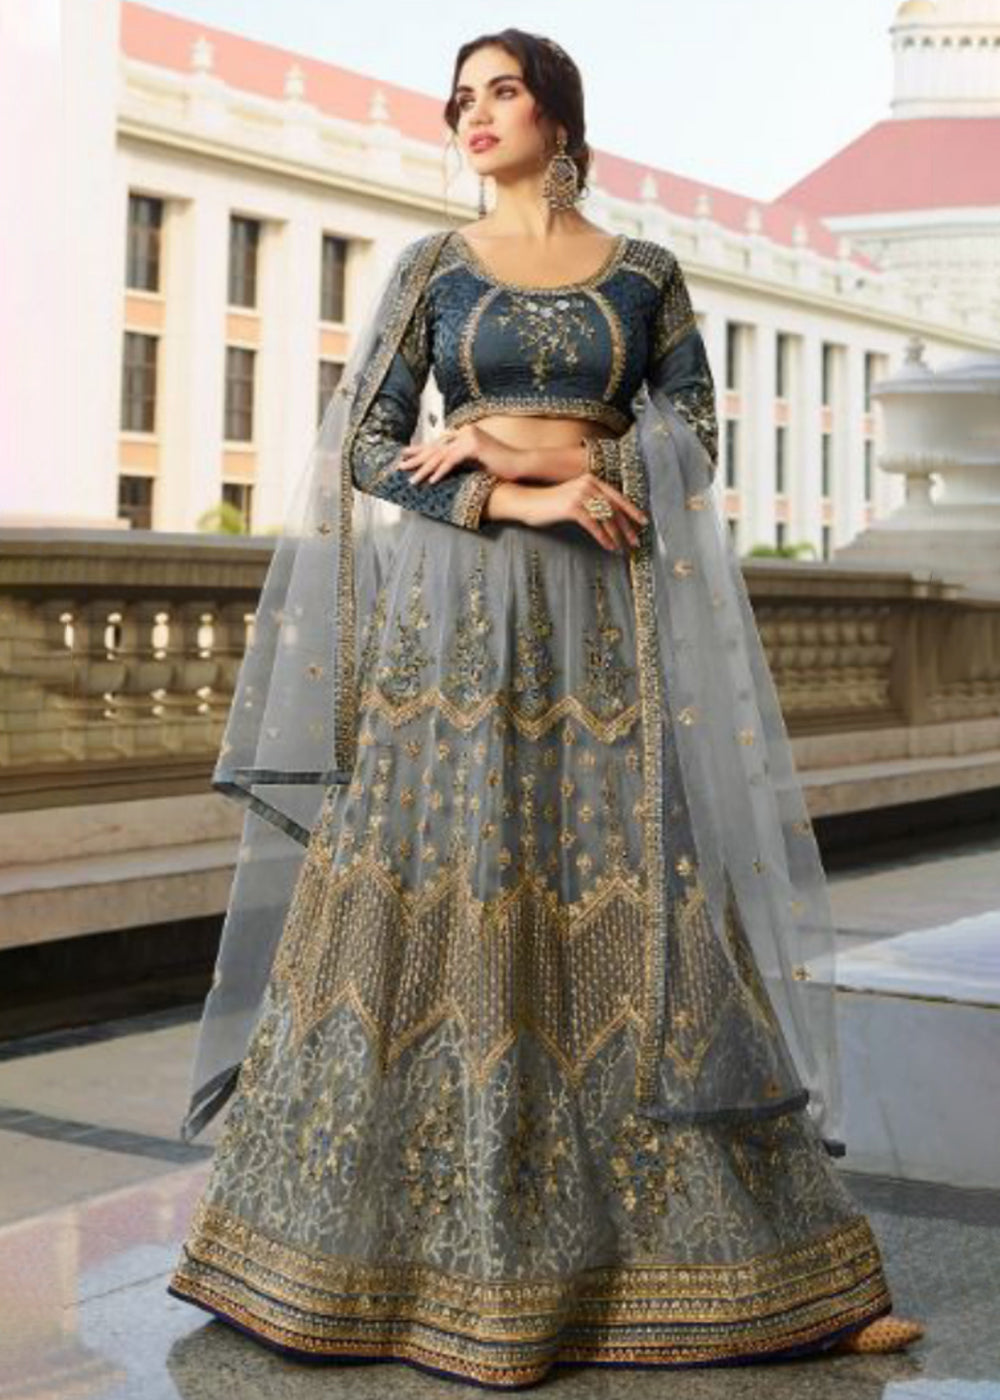 Buy Now Wedding Party Grey & Gold Embroidered Stunning Lehenga Choli in USA, UK, Canada & Worldwide at Empress Clothing.